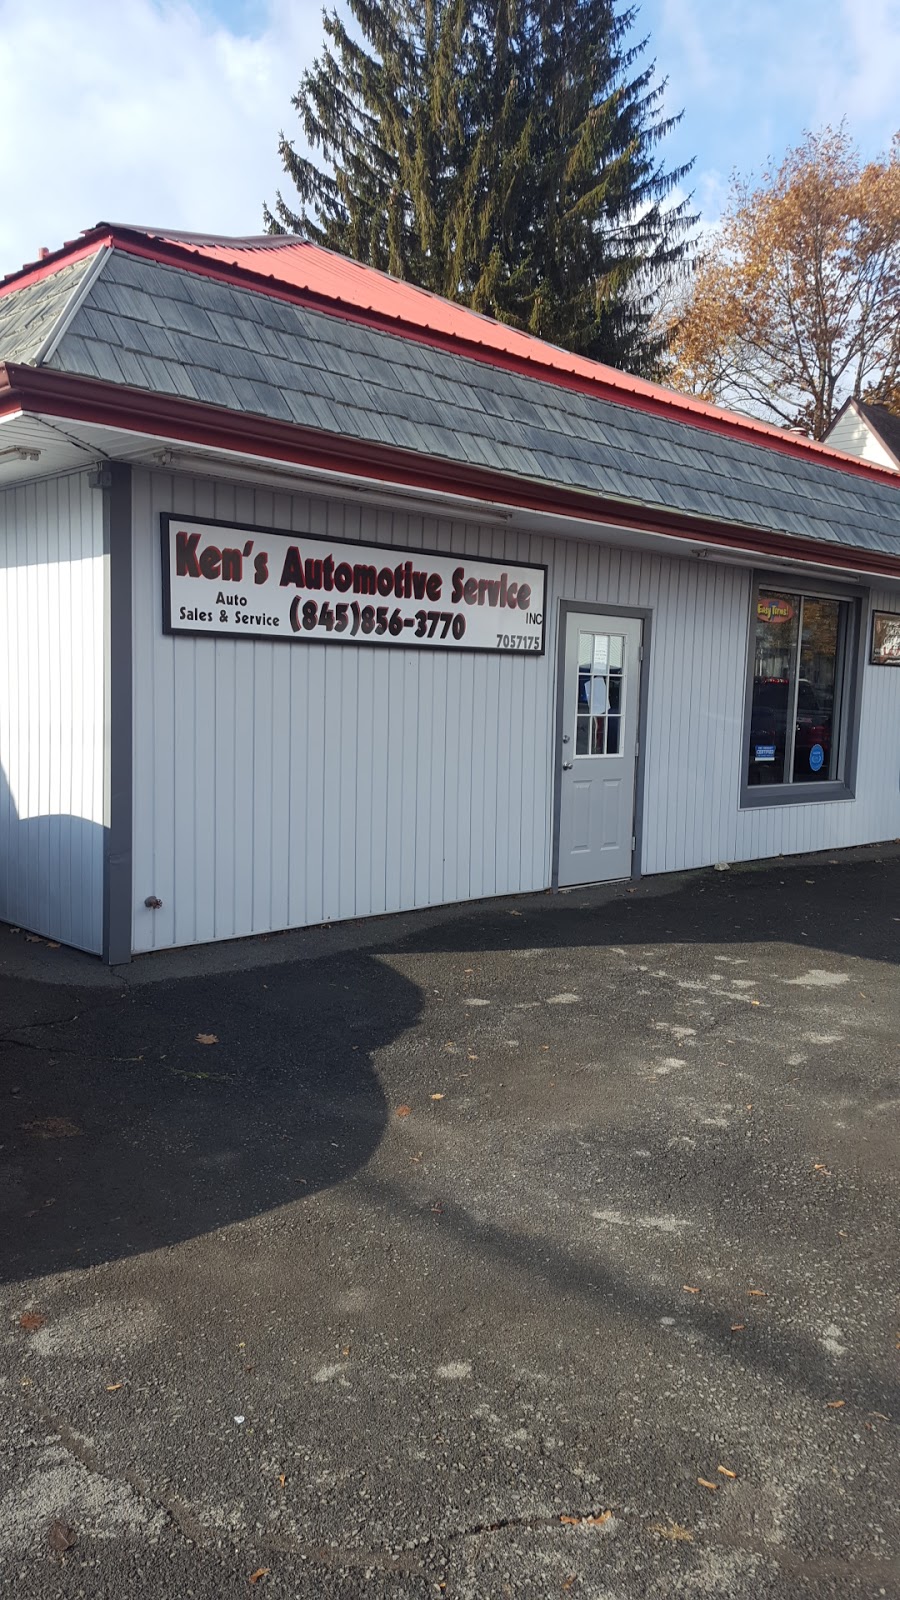 Kens Automotive Inc. | 20 W Main St, Port Jervis, NY 12771 | Phone: (845) 856-3770